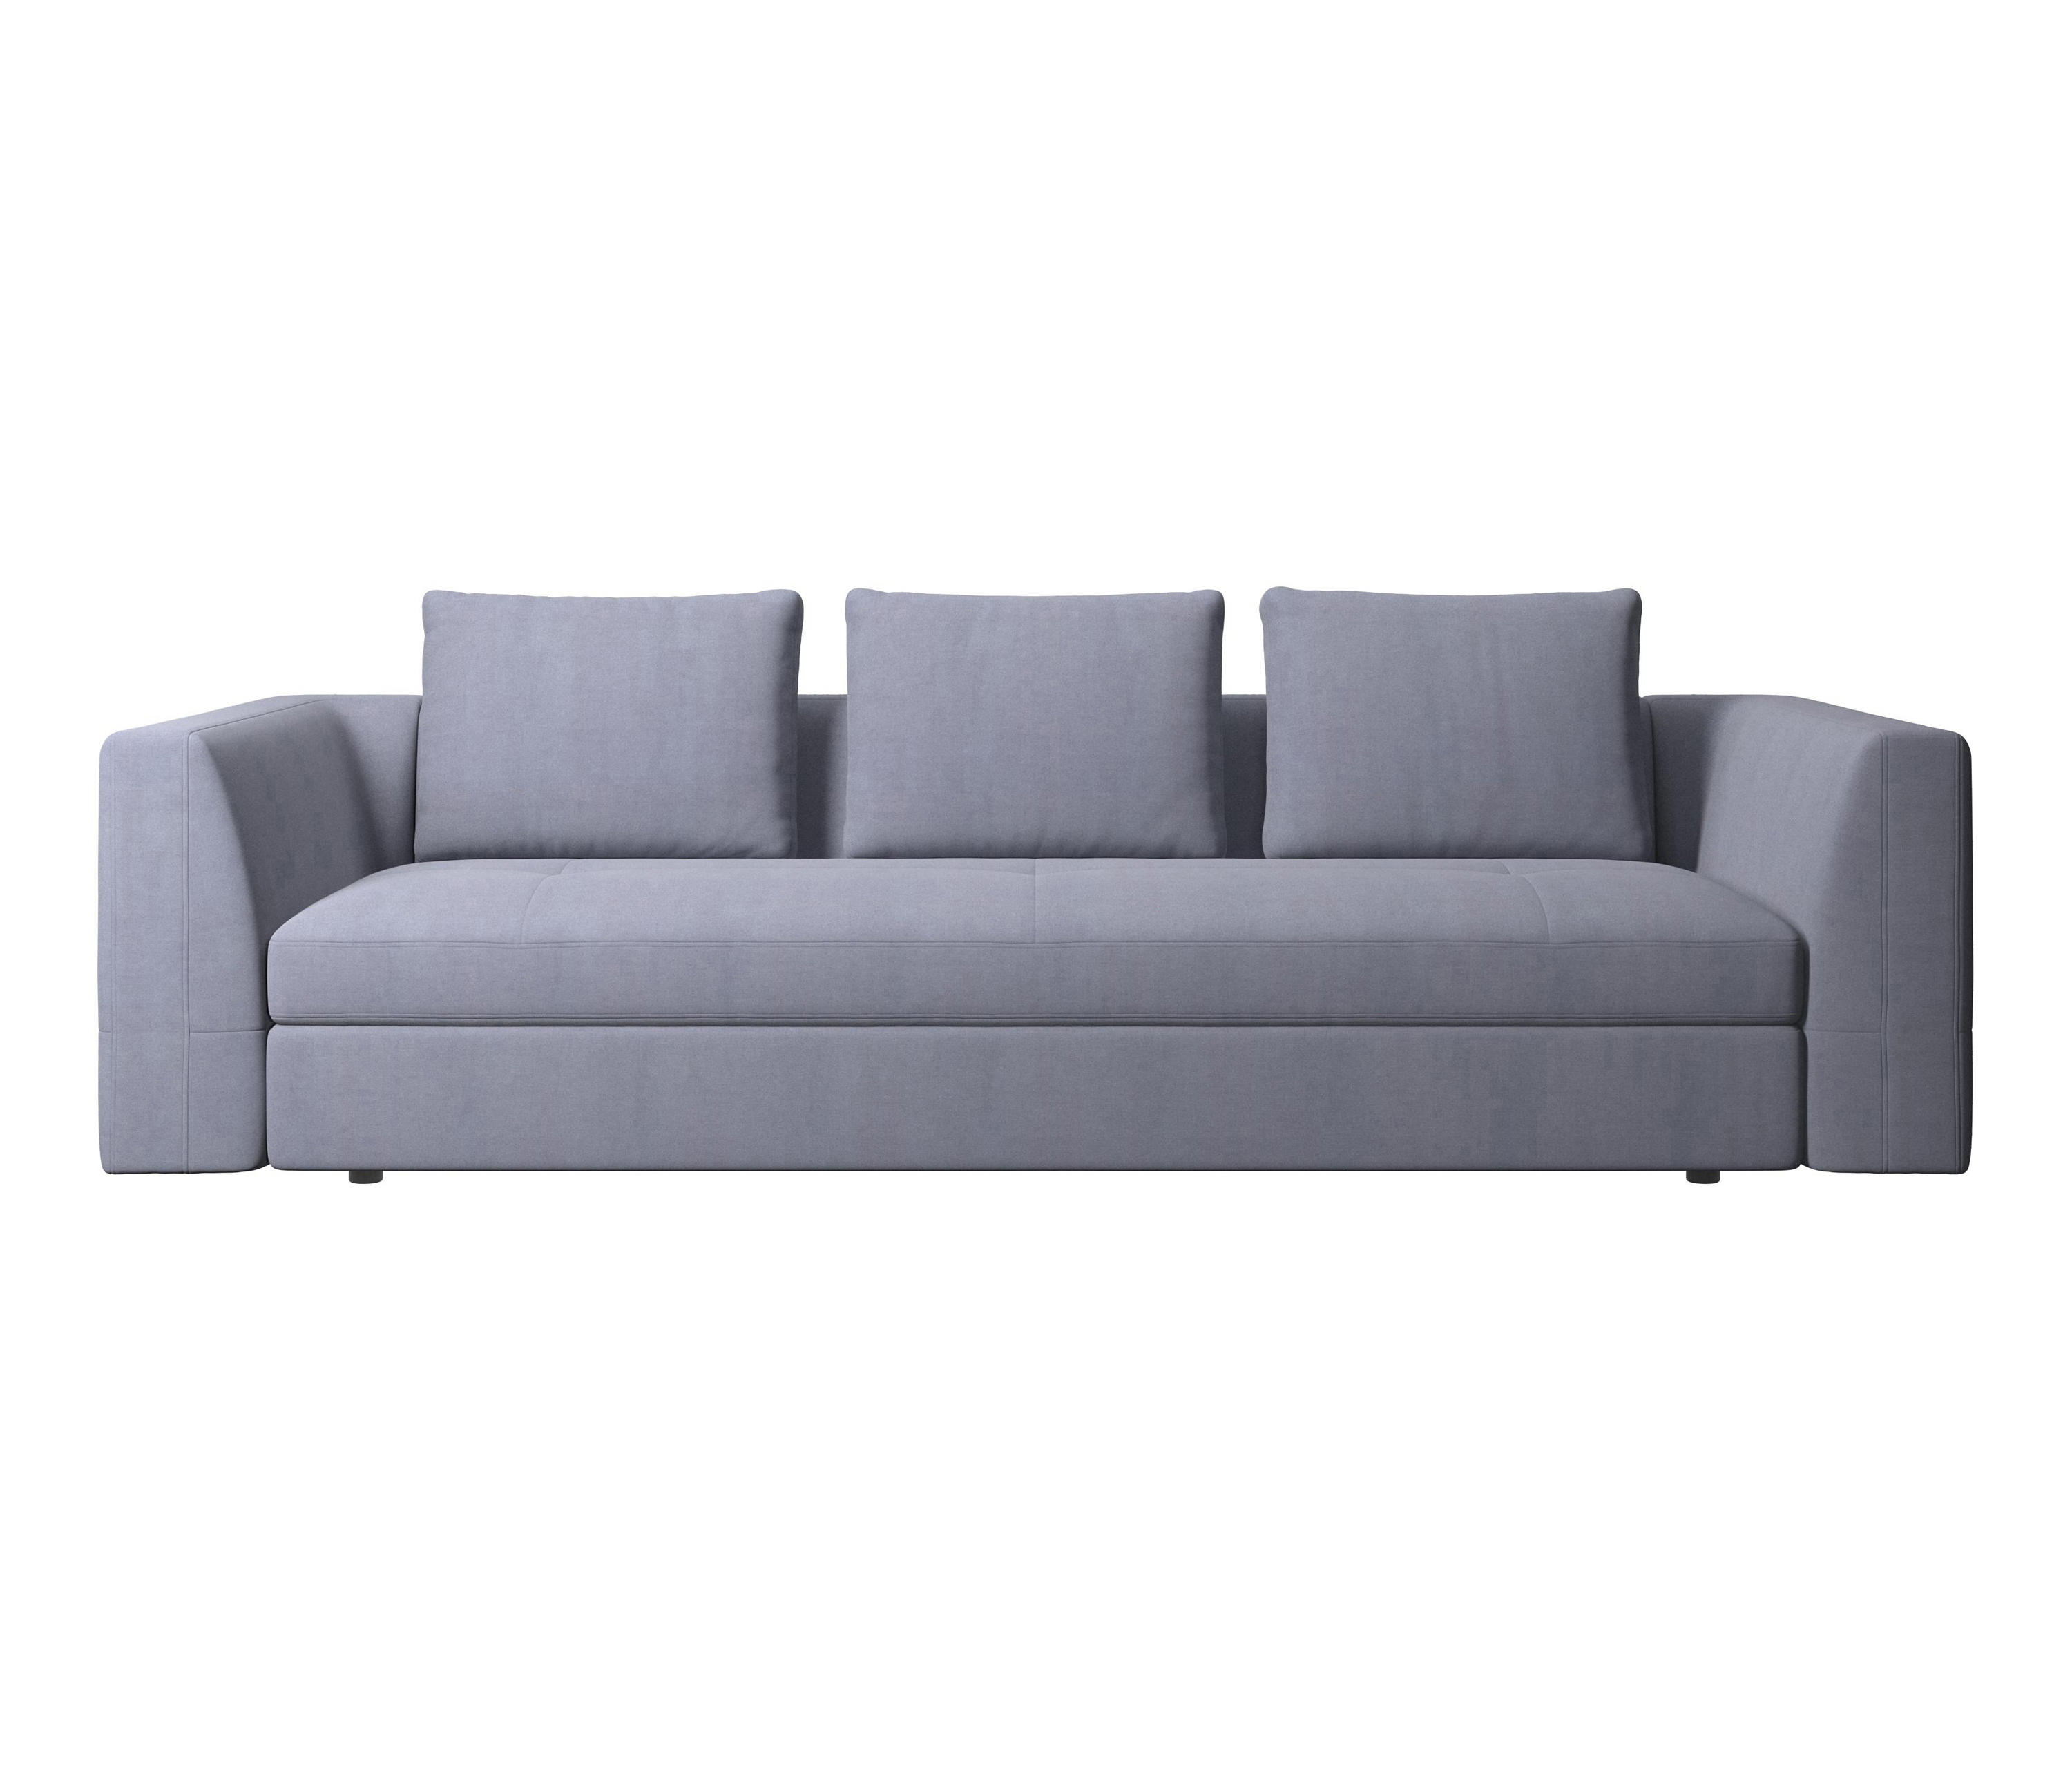 Bergamo sofa 3 seater & designer furniture | Architonic